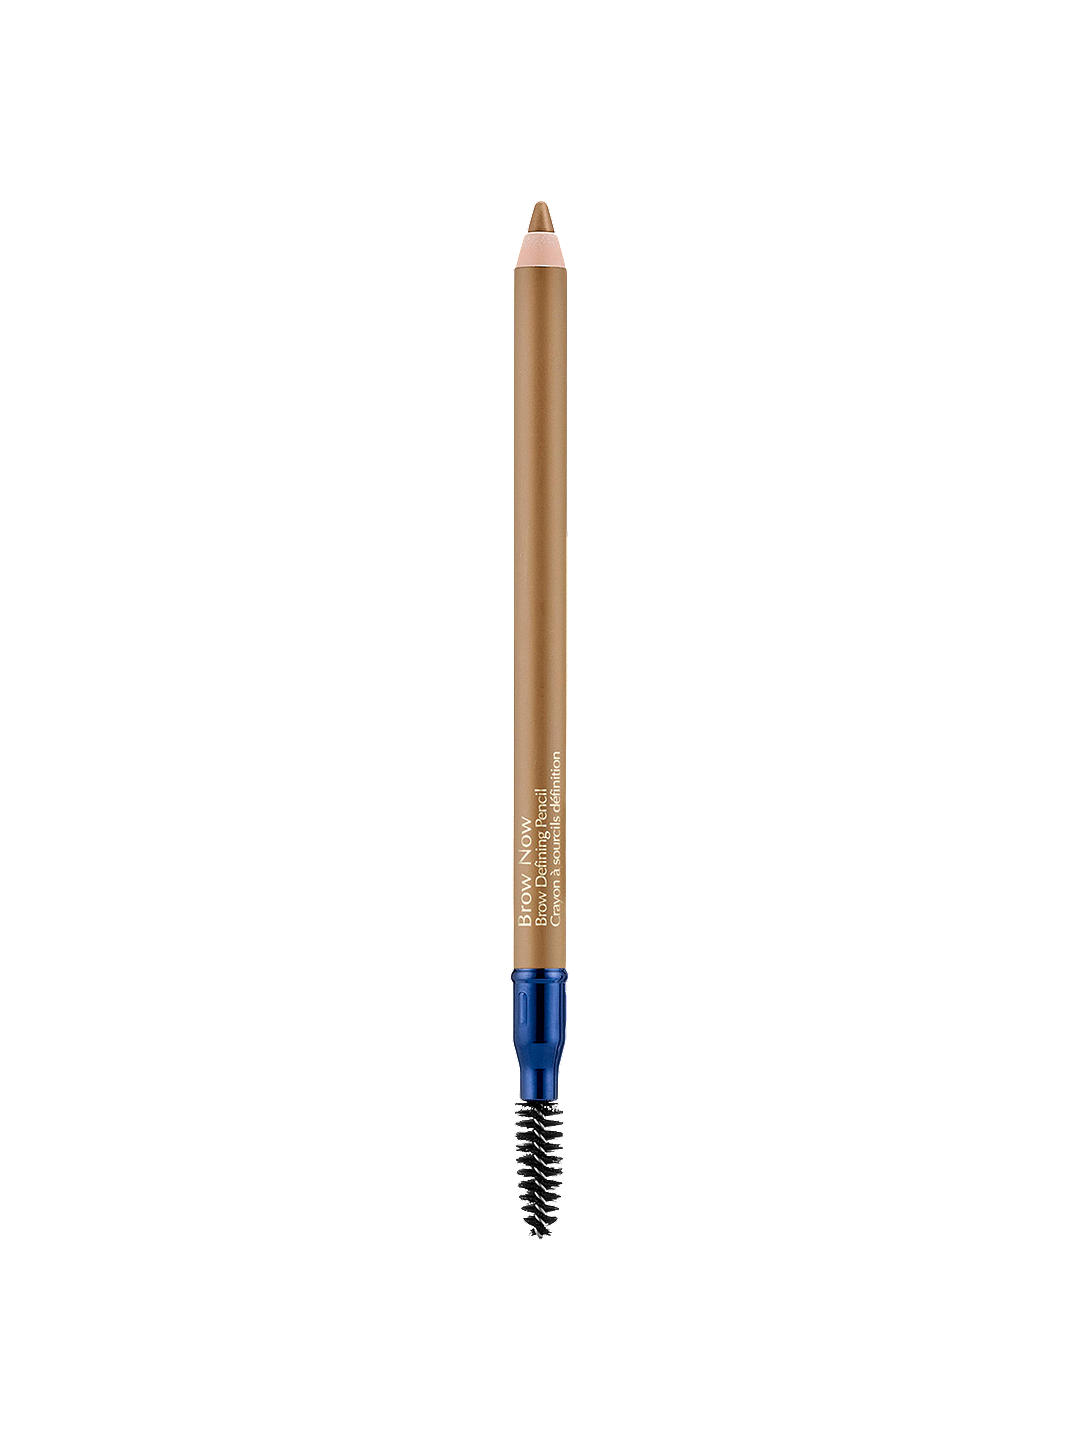 Estée Lauder Brow Now Brow Defining Pencil, Blonde 1